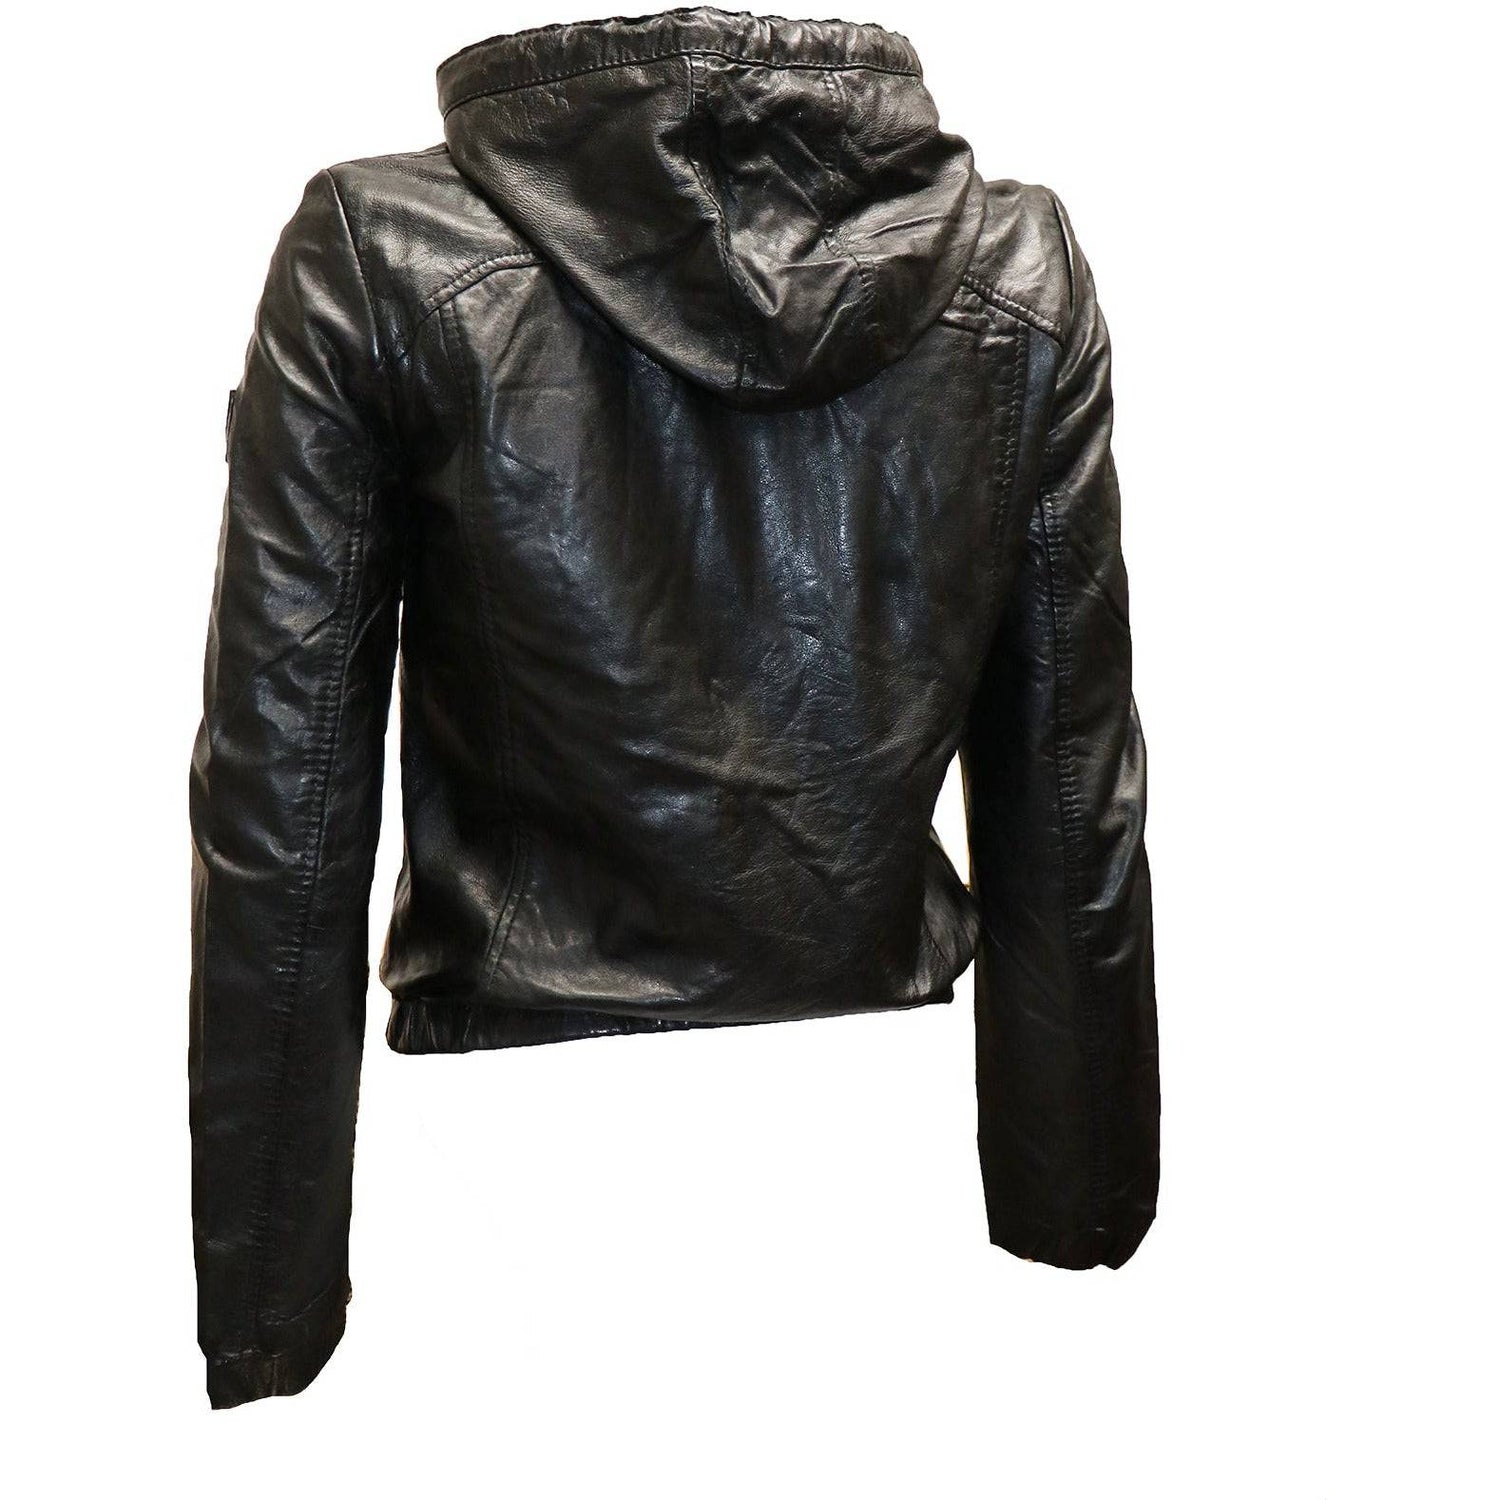 Mauritius Women's Leather Bomber Jacket with Hood - Zooloo Leather